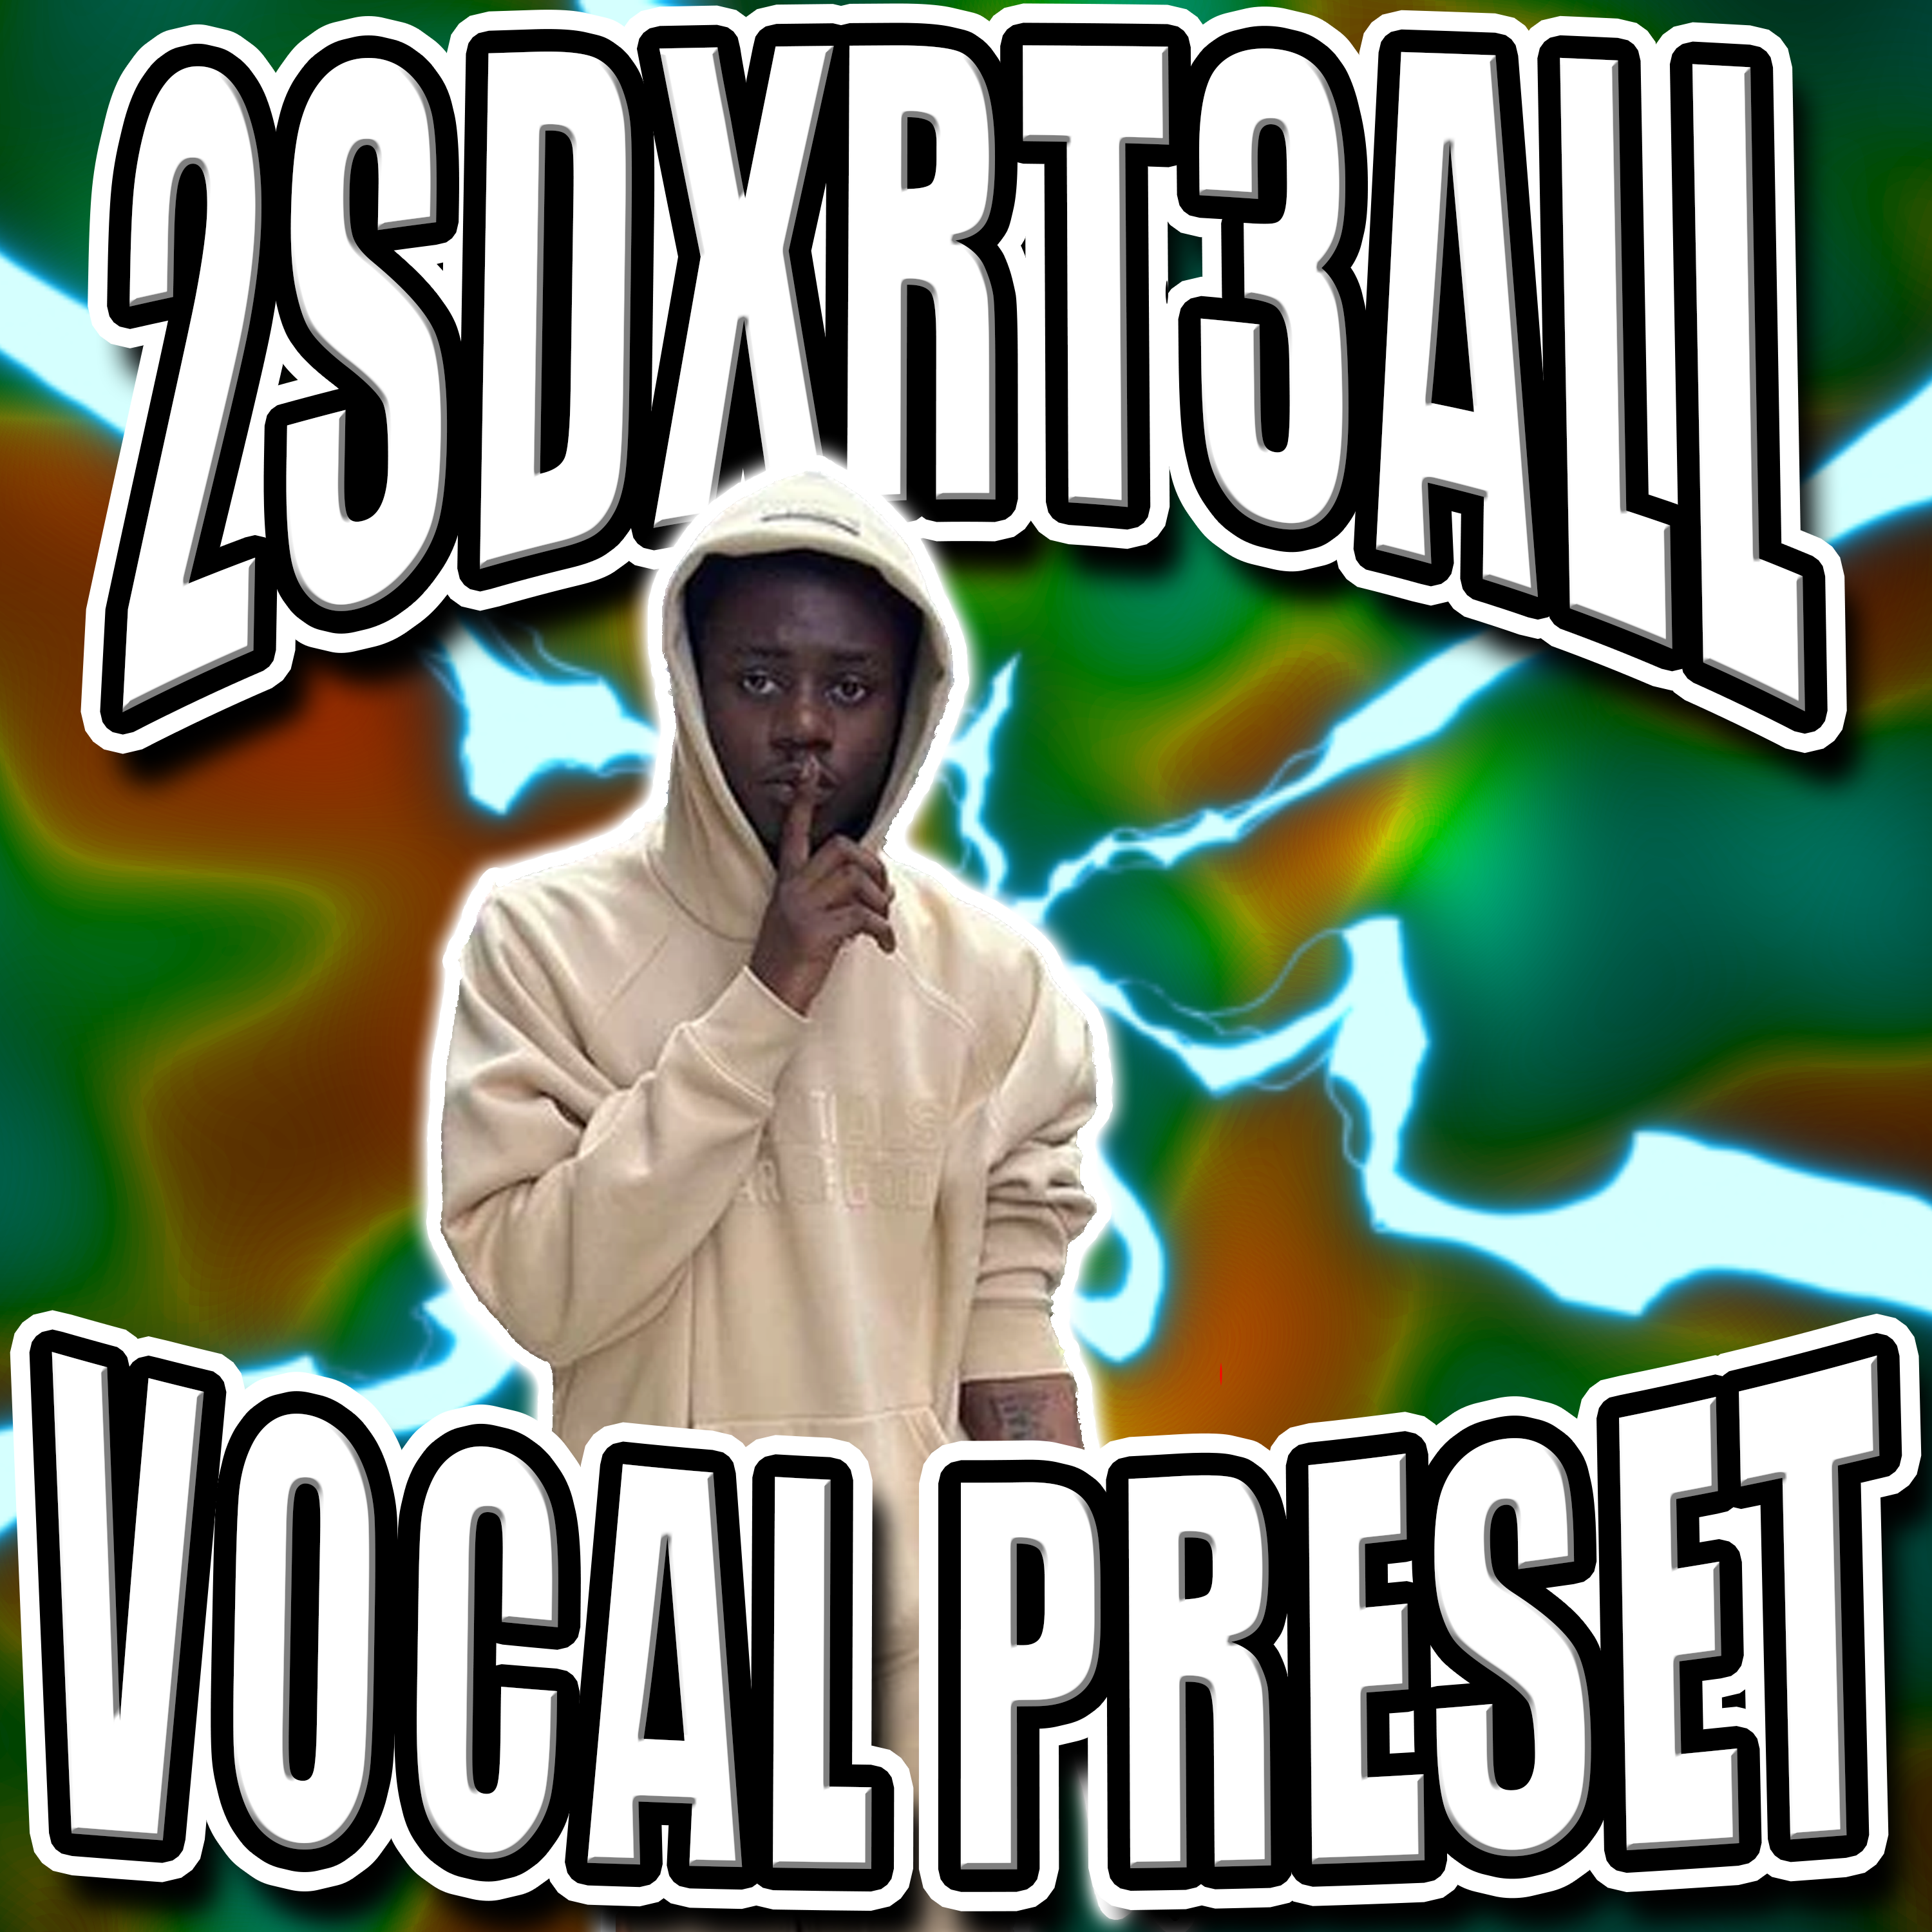 2Sdxrt3all Vocal Preset